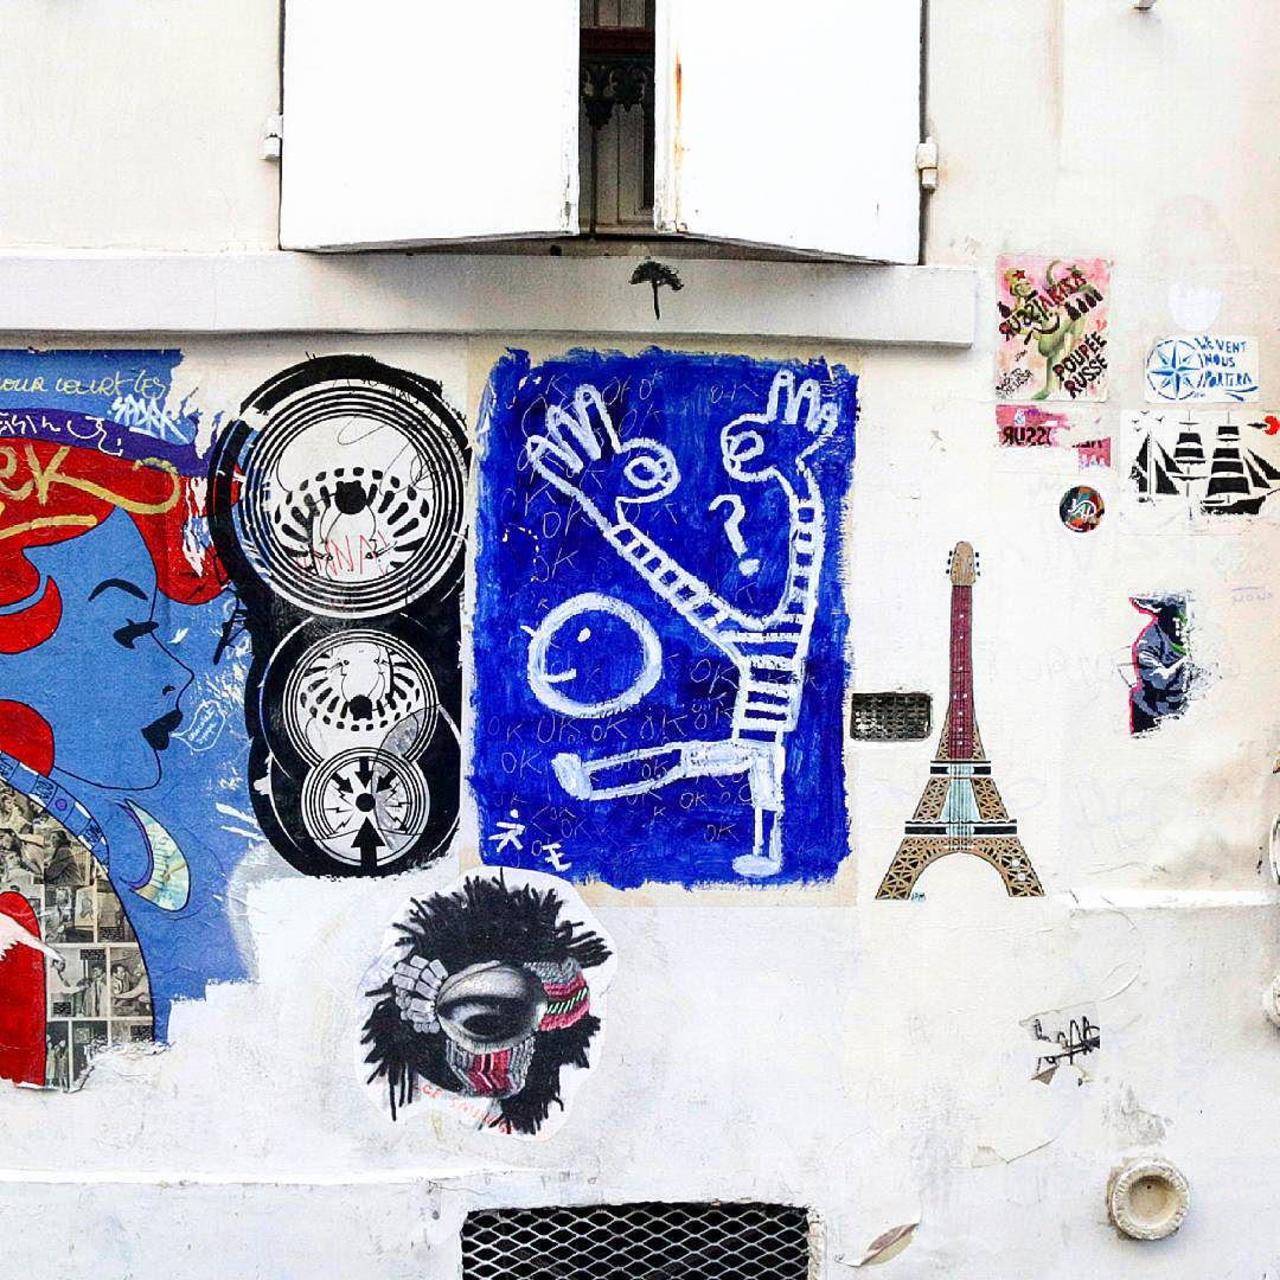 #Paris #graffiti photo by @jpoesse http://ift.tt/1GNzxsz #StreetArt http://t.co/5MYAQIpsL0